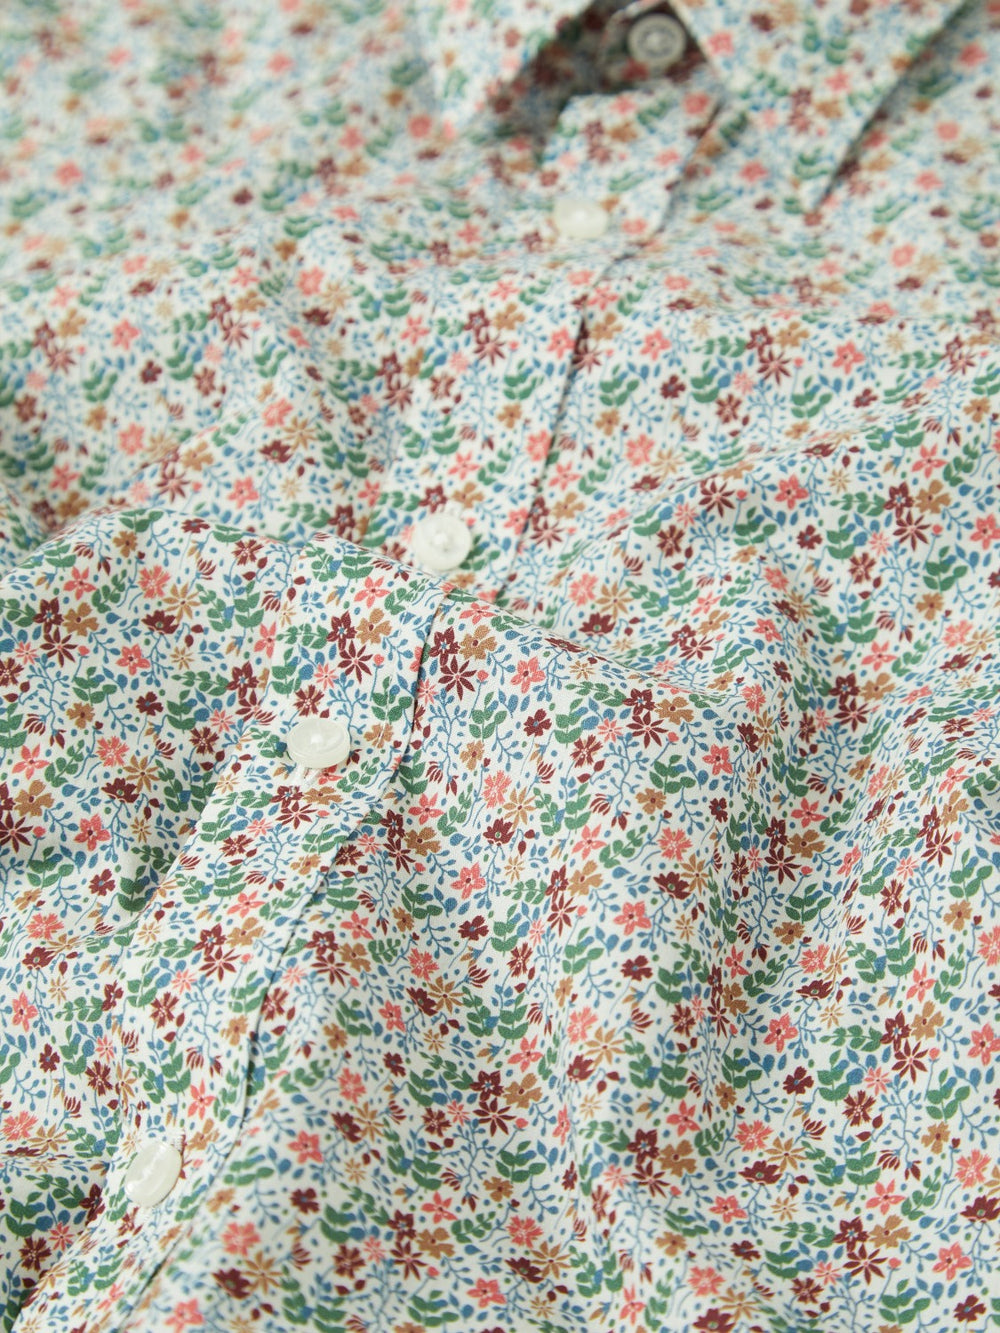 Floral Print Long-Sleeve Shirt - Ben Sherman